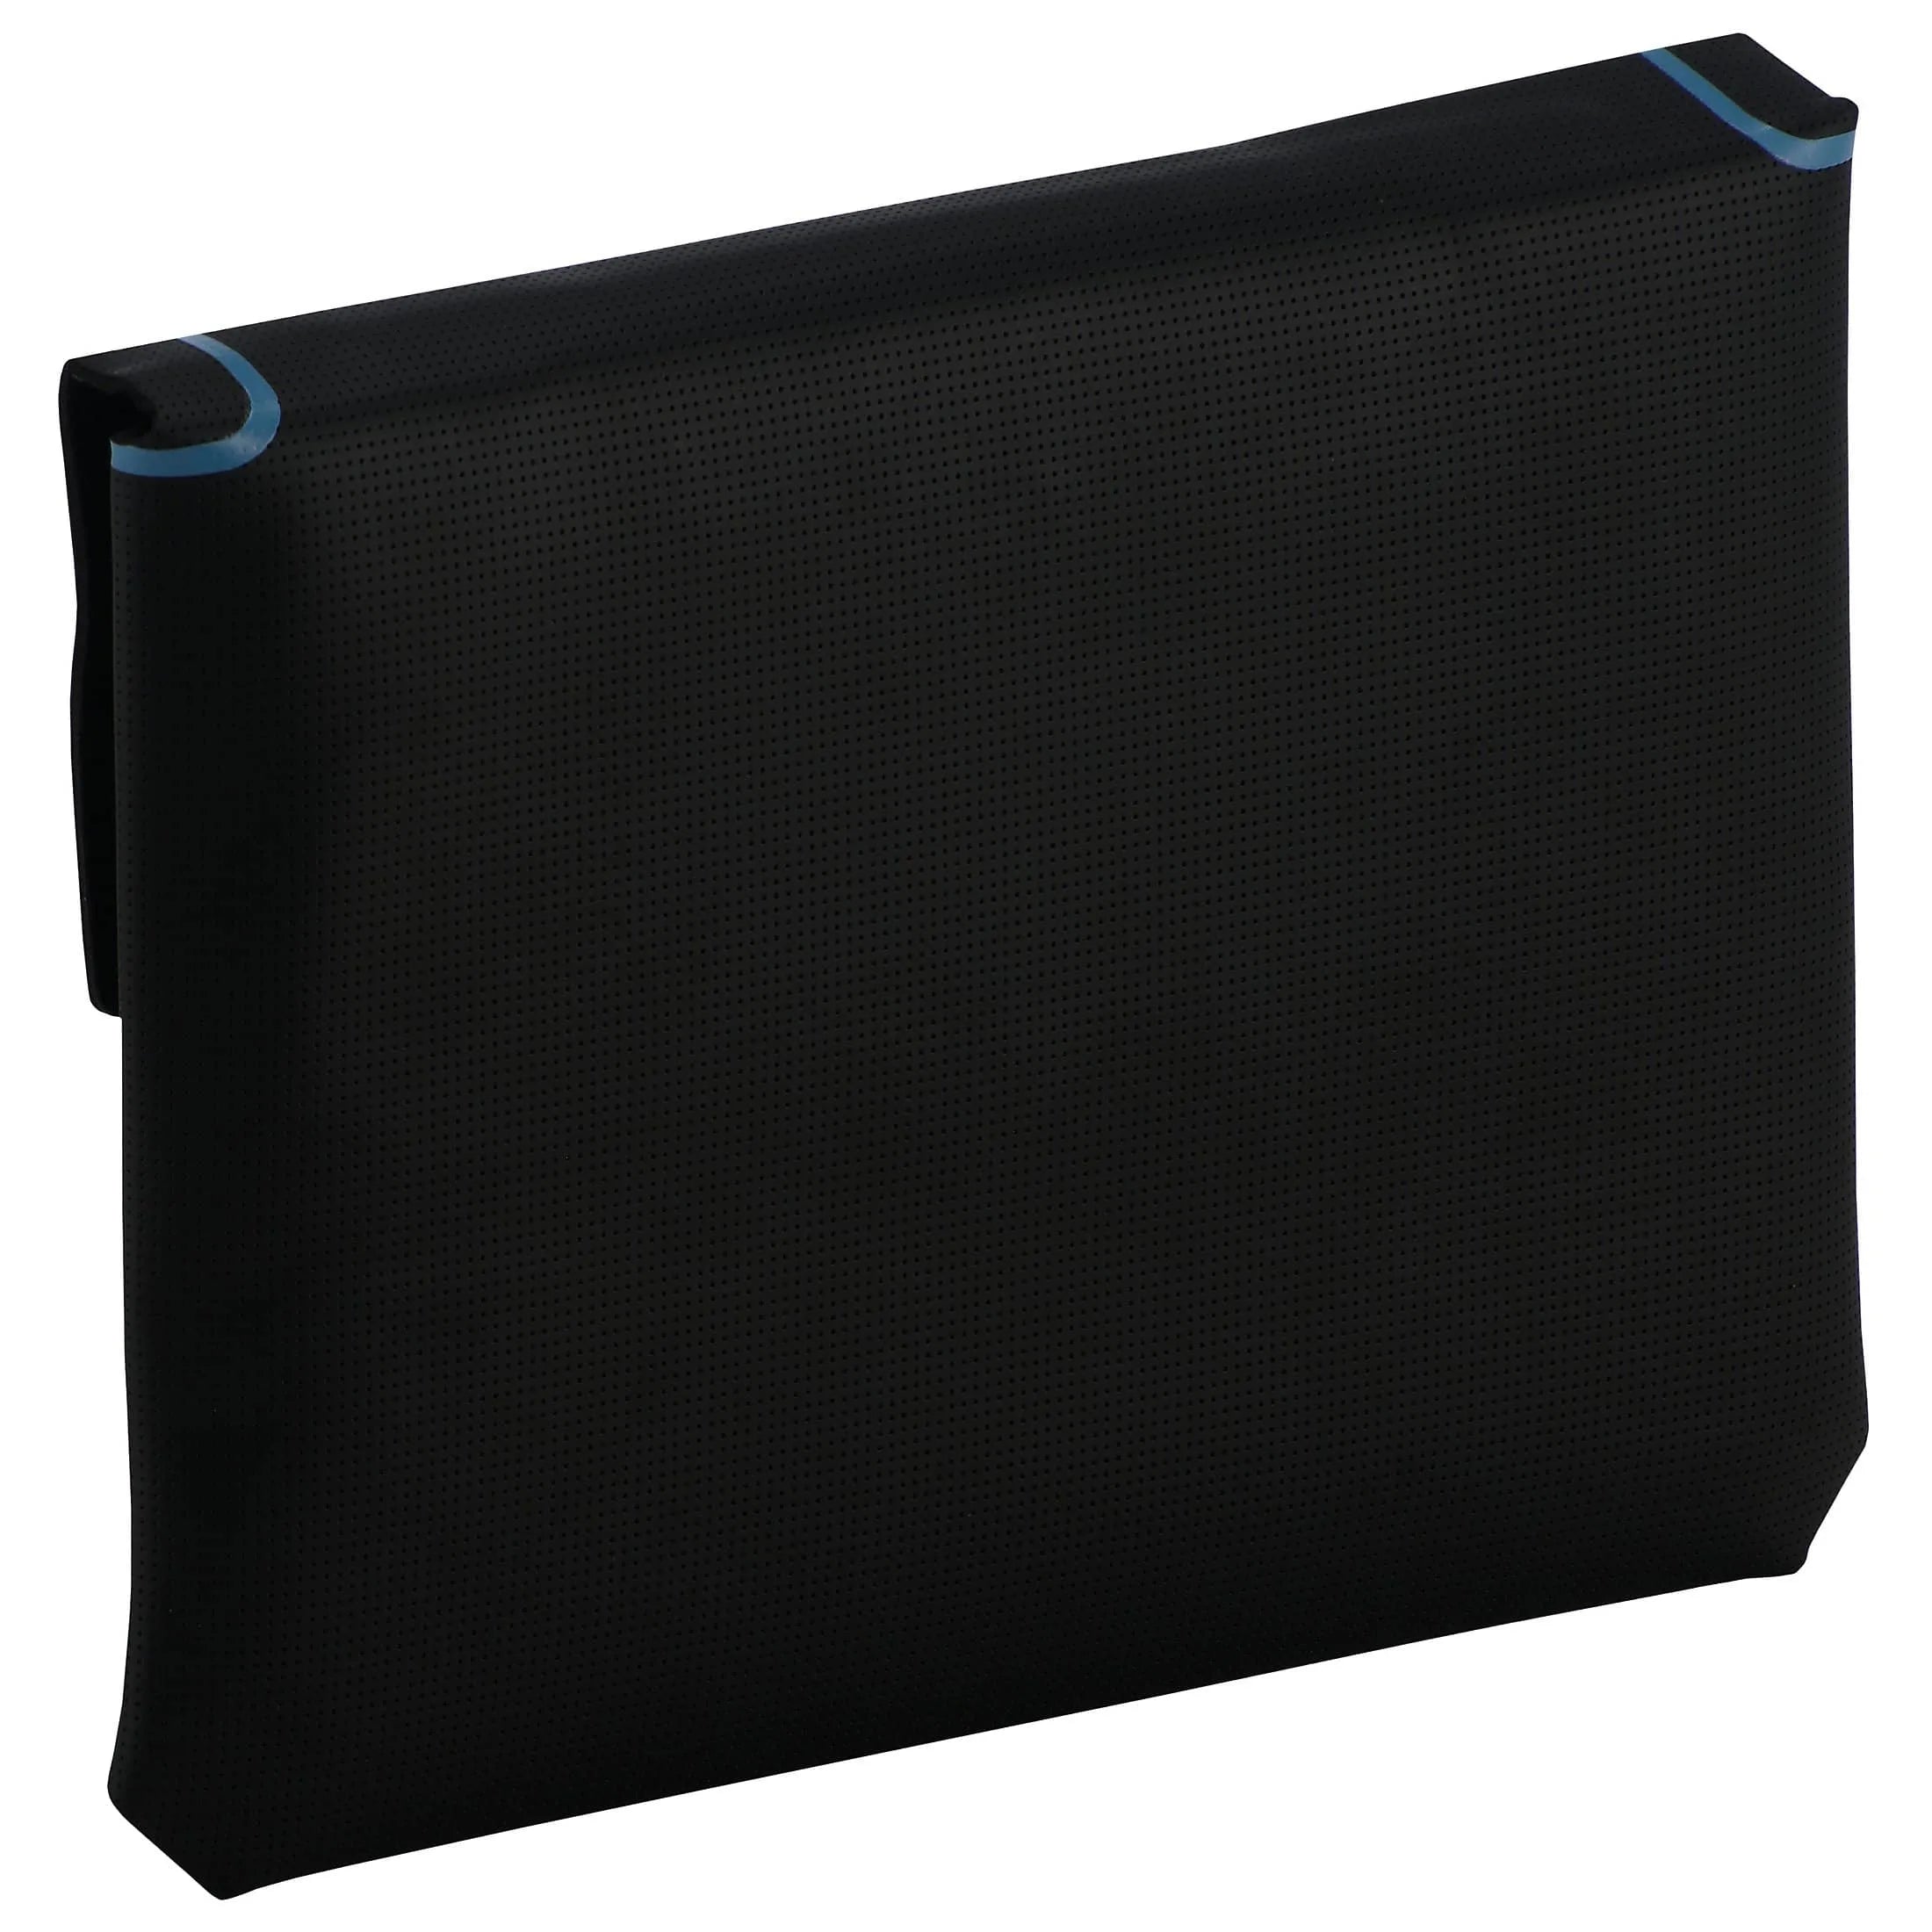 Samsonite Thermo Tech laptop sleeve 28 cm - blue/light blue